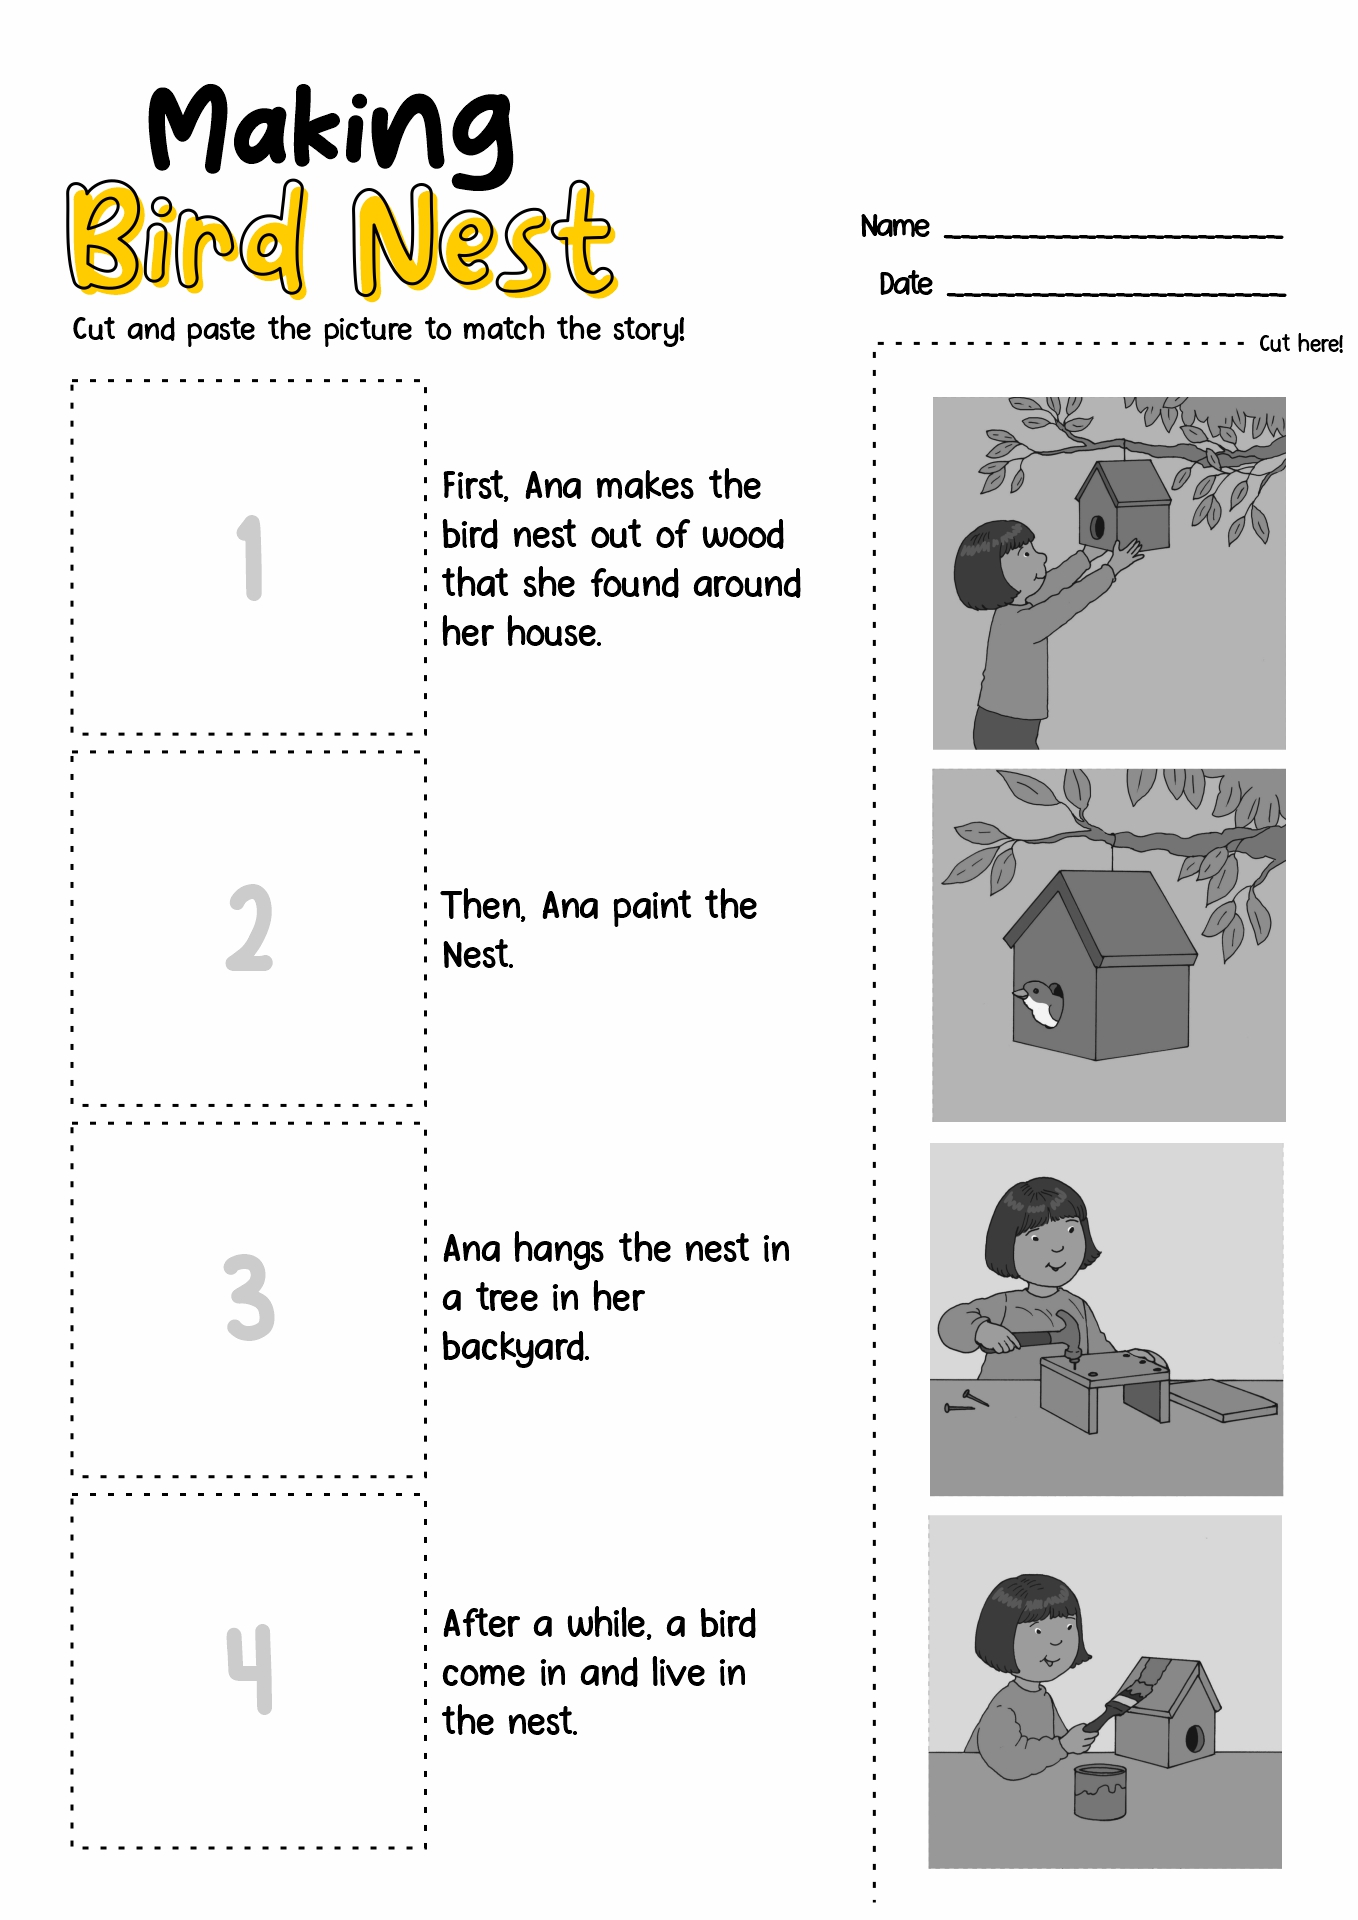 kindergarten paste worksheets weather cut and Images Worksheets Weather 8 Paste of Cut And Best